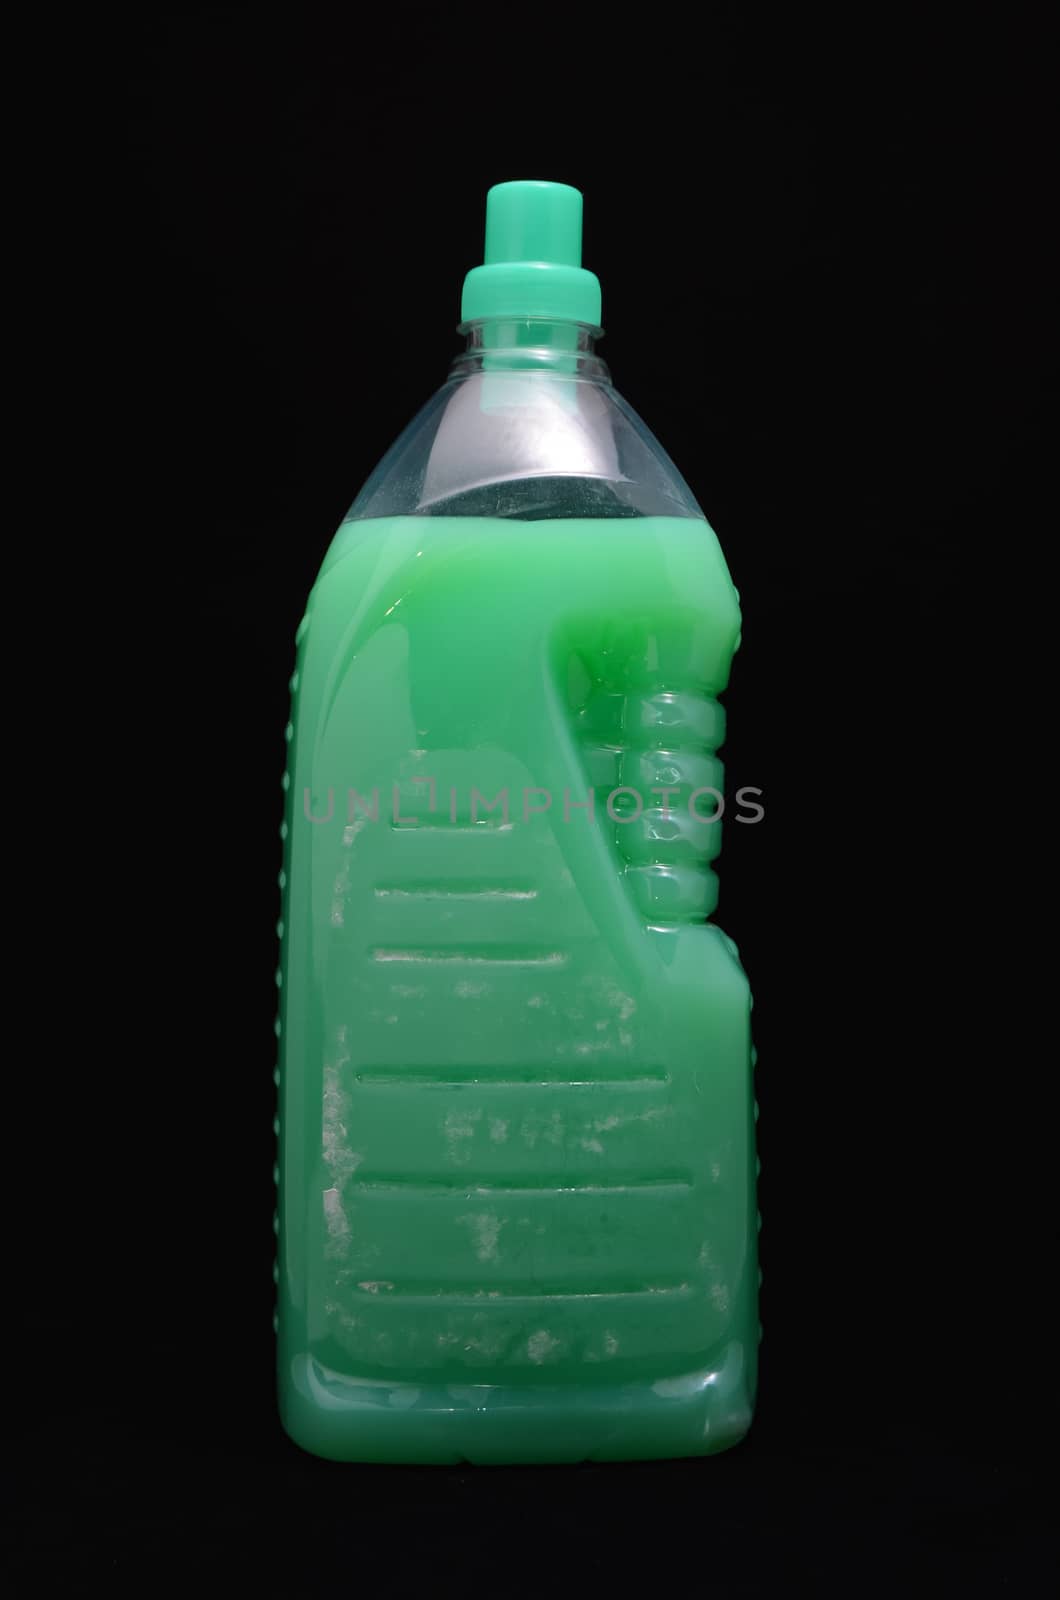 Plastic Green Detergent Bottle on a Black background